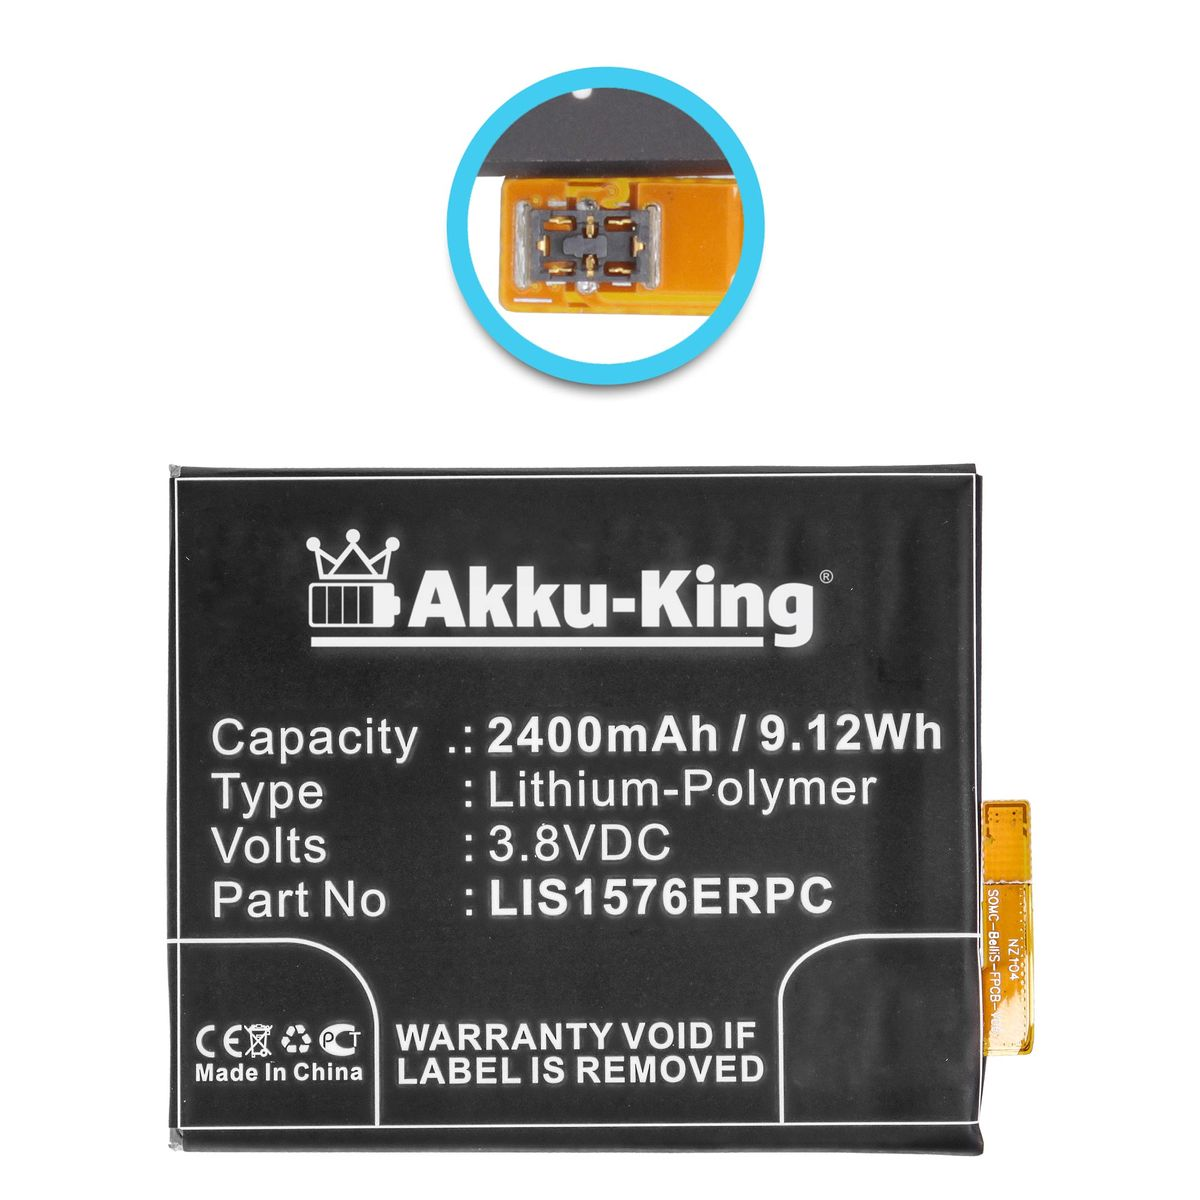 mit Li-Polymer Handy-Akku, Sony Akku 3.8 LIS1576ERPC AKKU-KING 2400mAh kompatibel Volt,